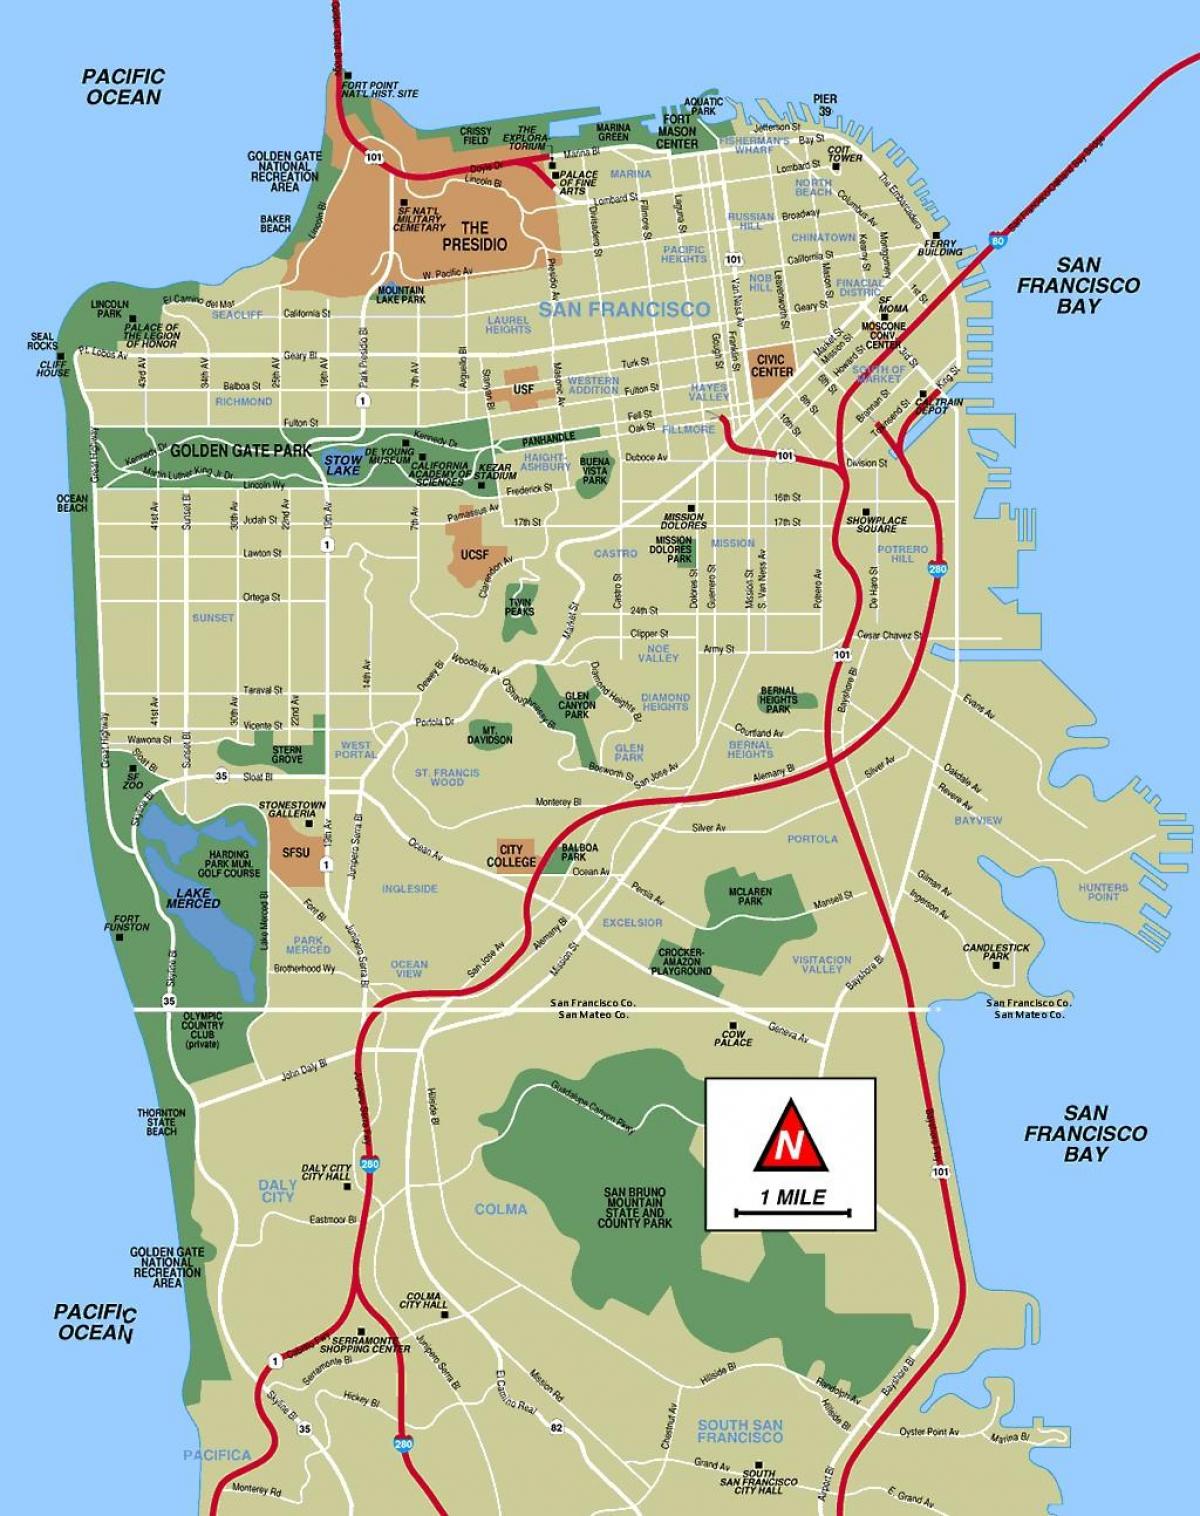 San Francisco stadsplattegrond